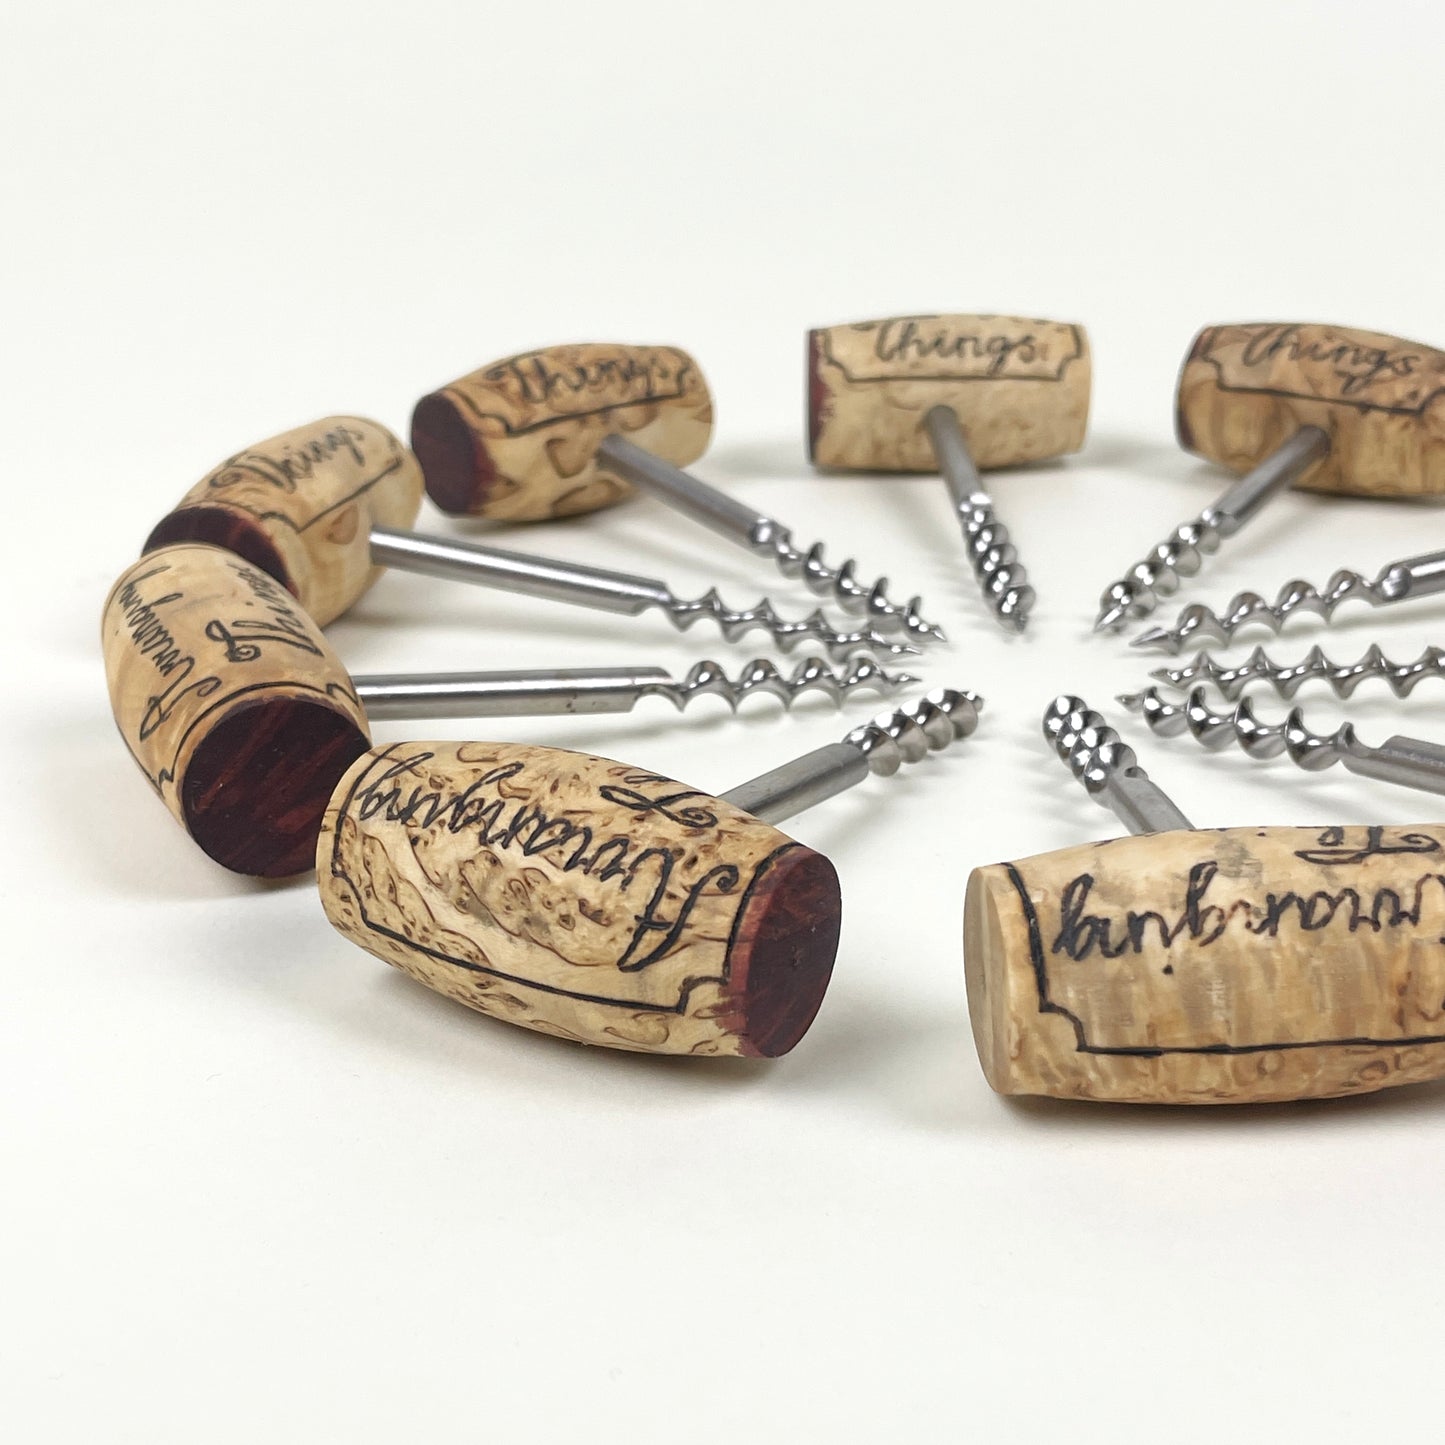 Arranging Things corkscrew in curly birch by Kasper Nihlmark